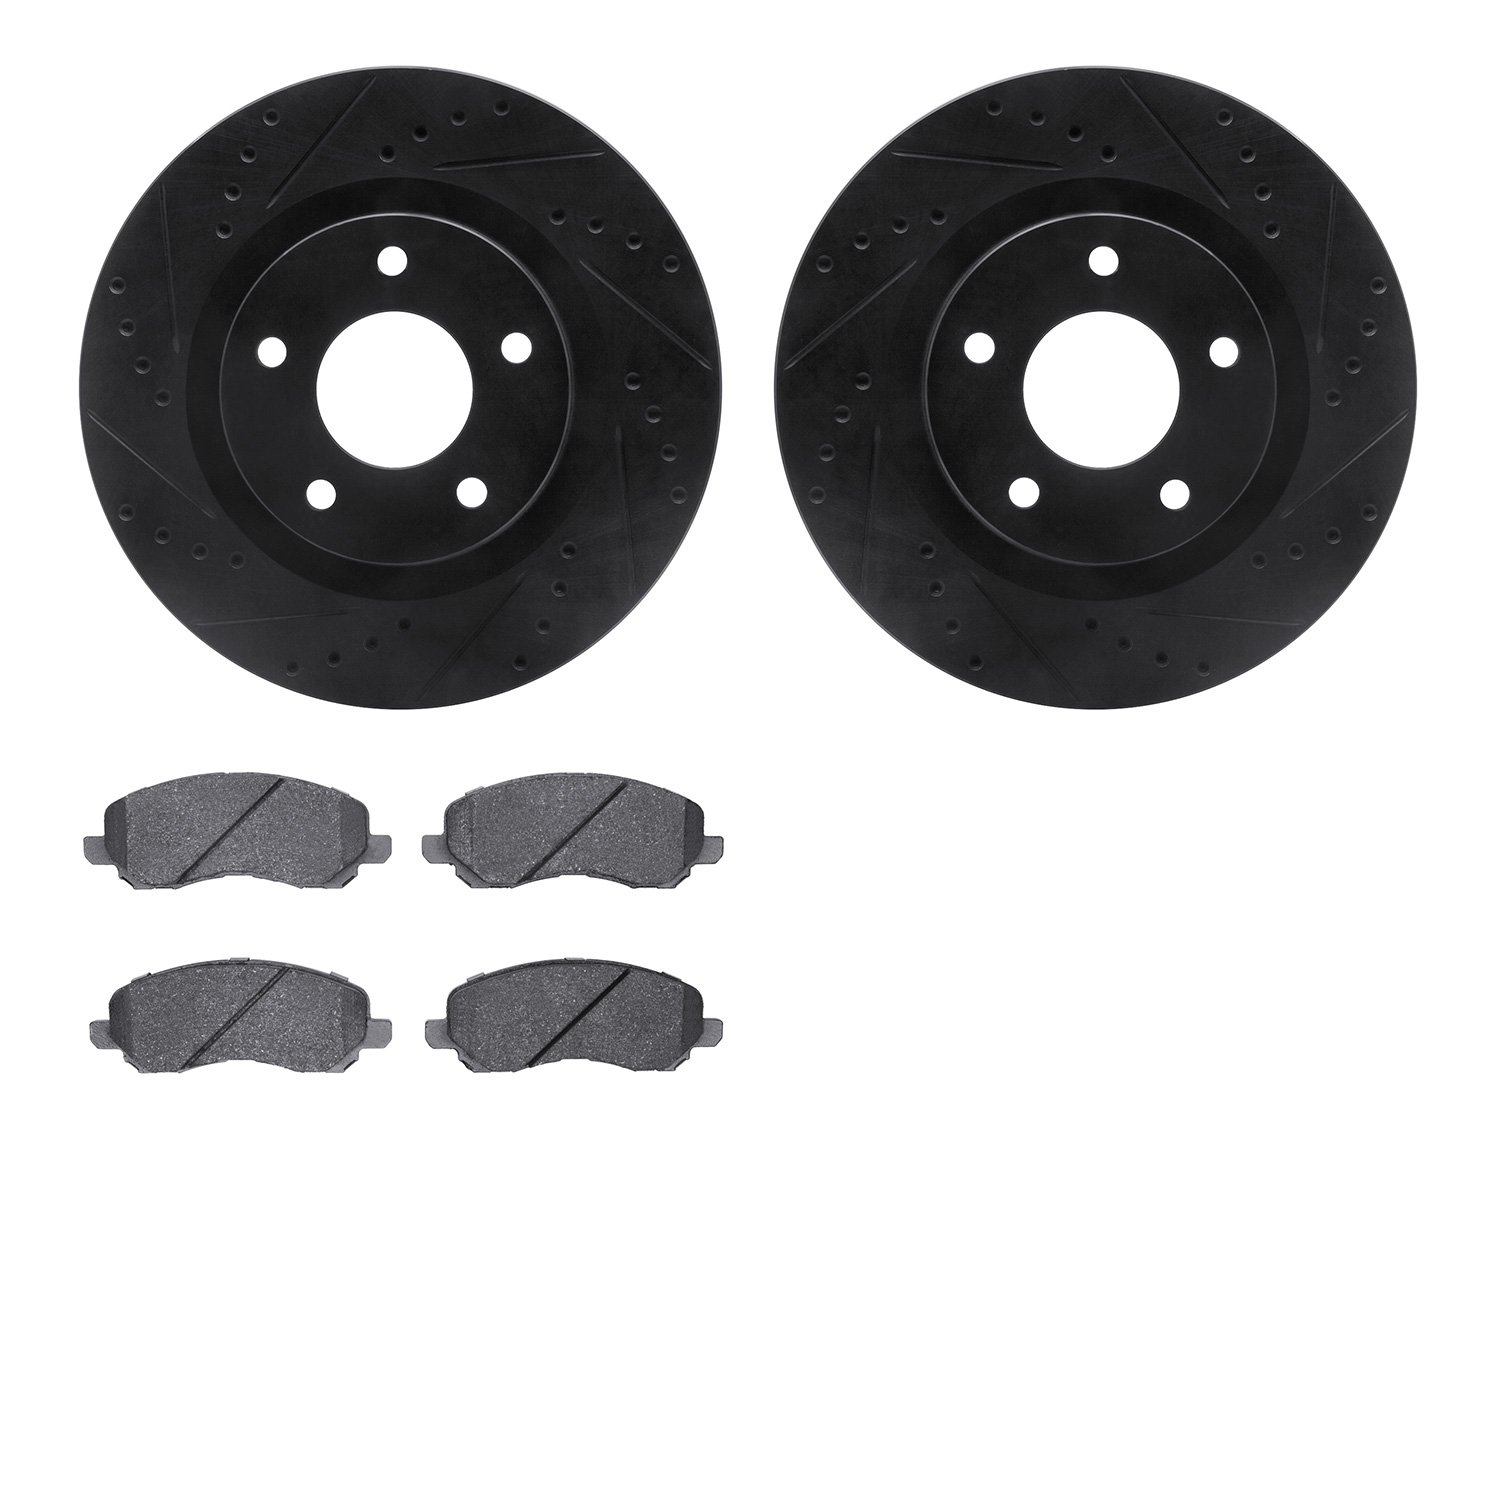 8302-39026 Drilled/Slotted Brake Rotors with 3000-Series Ceramic Brake Pads Kit [Black], Fits Select Multiple Makes/Models, Posi